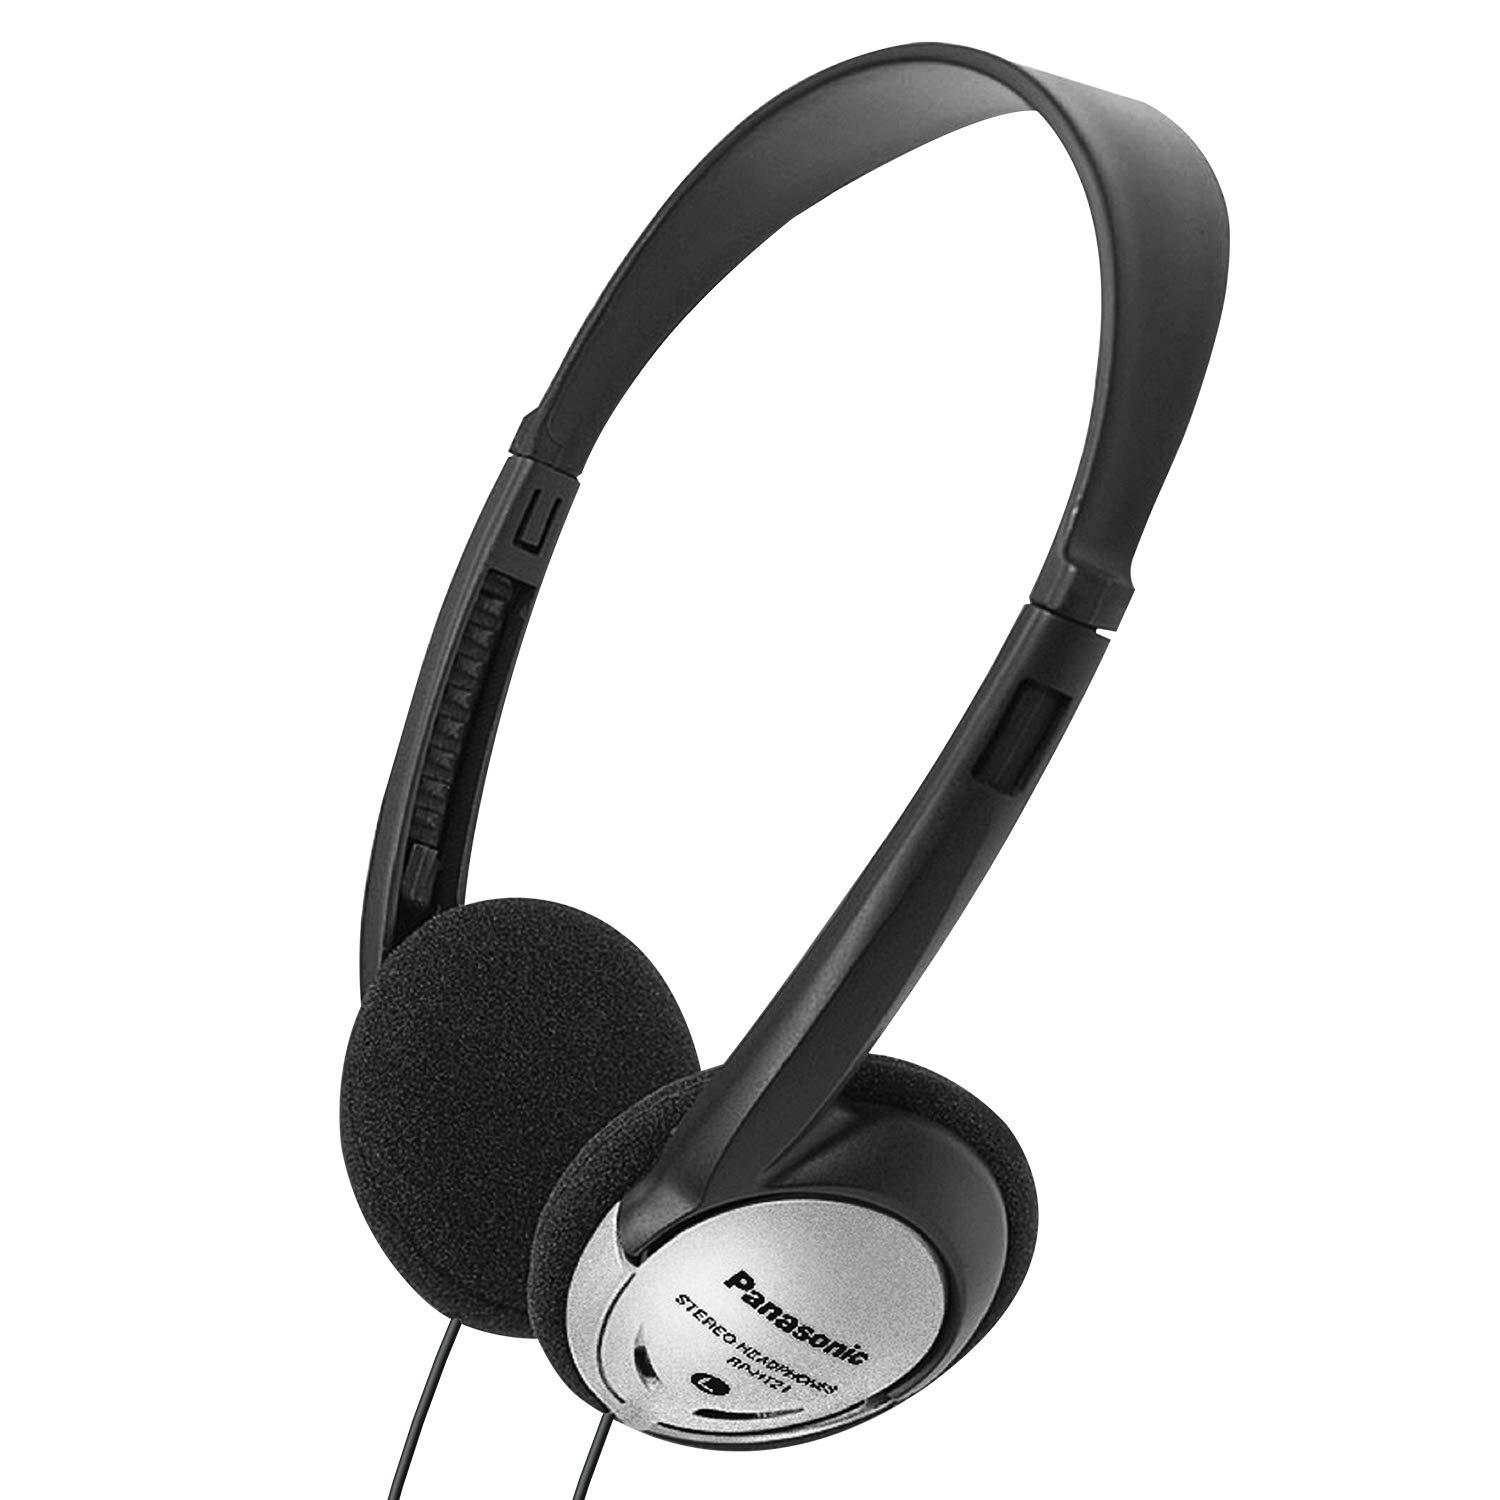  Panasonic 头戴式耳机，带 XBS 的贴耳式轻型耳机，可提供超重低音和清晰自然的声音，适用于手机和笔记本电脑的 3.5 毫米插孔，适合在家工作 - RP-HT21（...